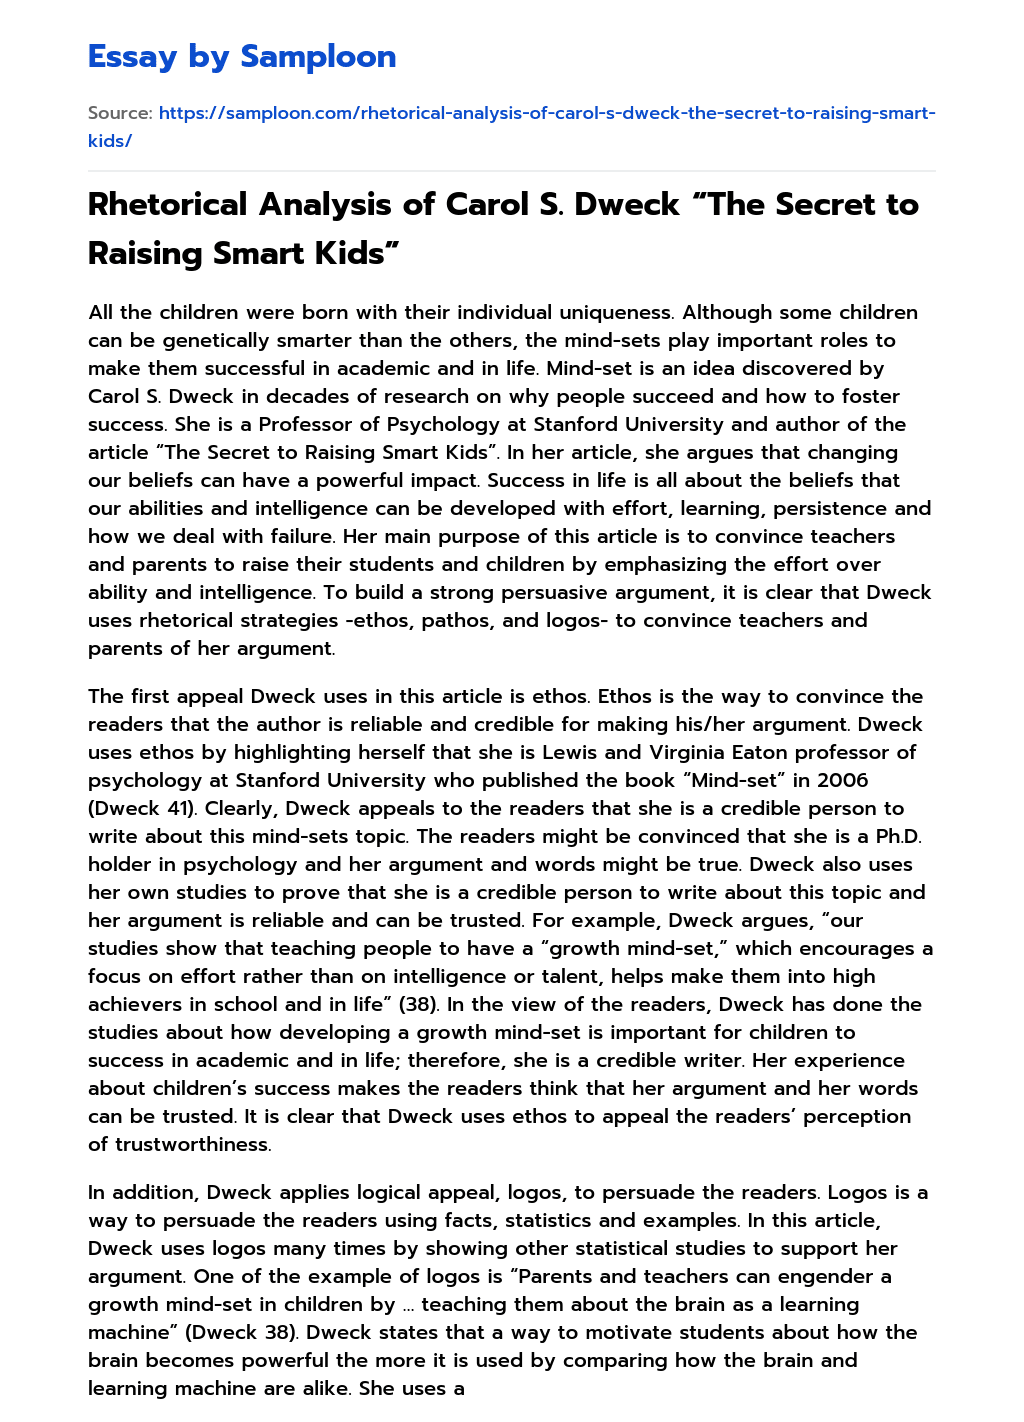 Rhetorical Analysis of Carol S. Dweck “The Secret to Raising Smart Kids” essay